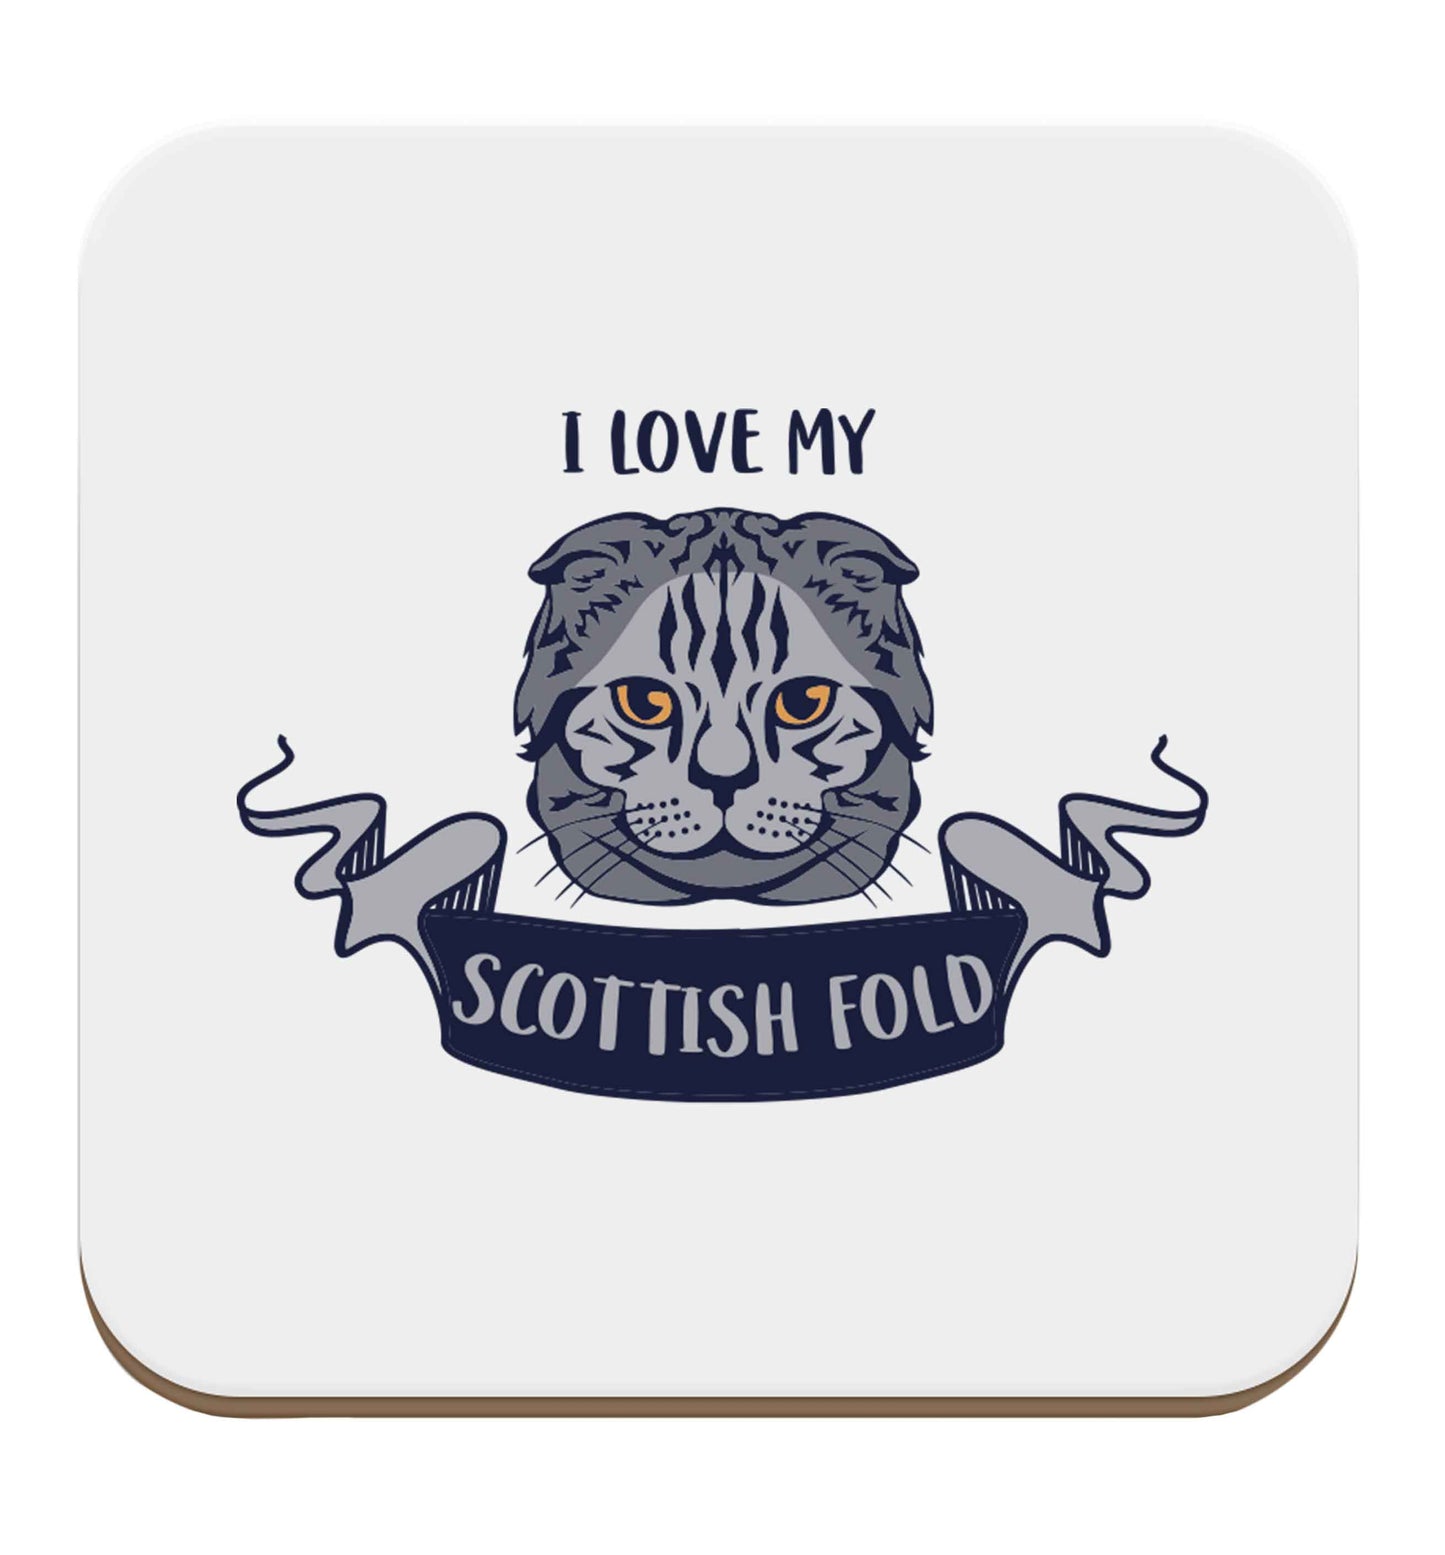 I love my scottish fold cat set of four coasters